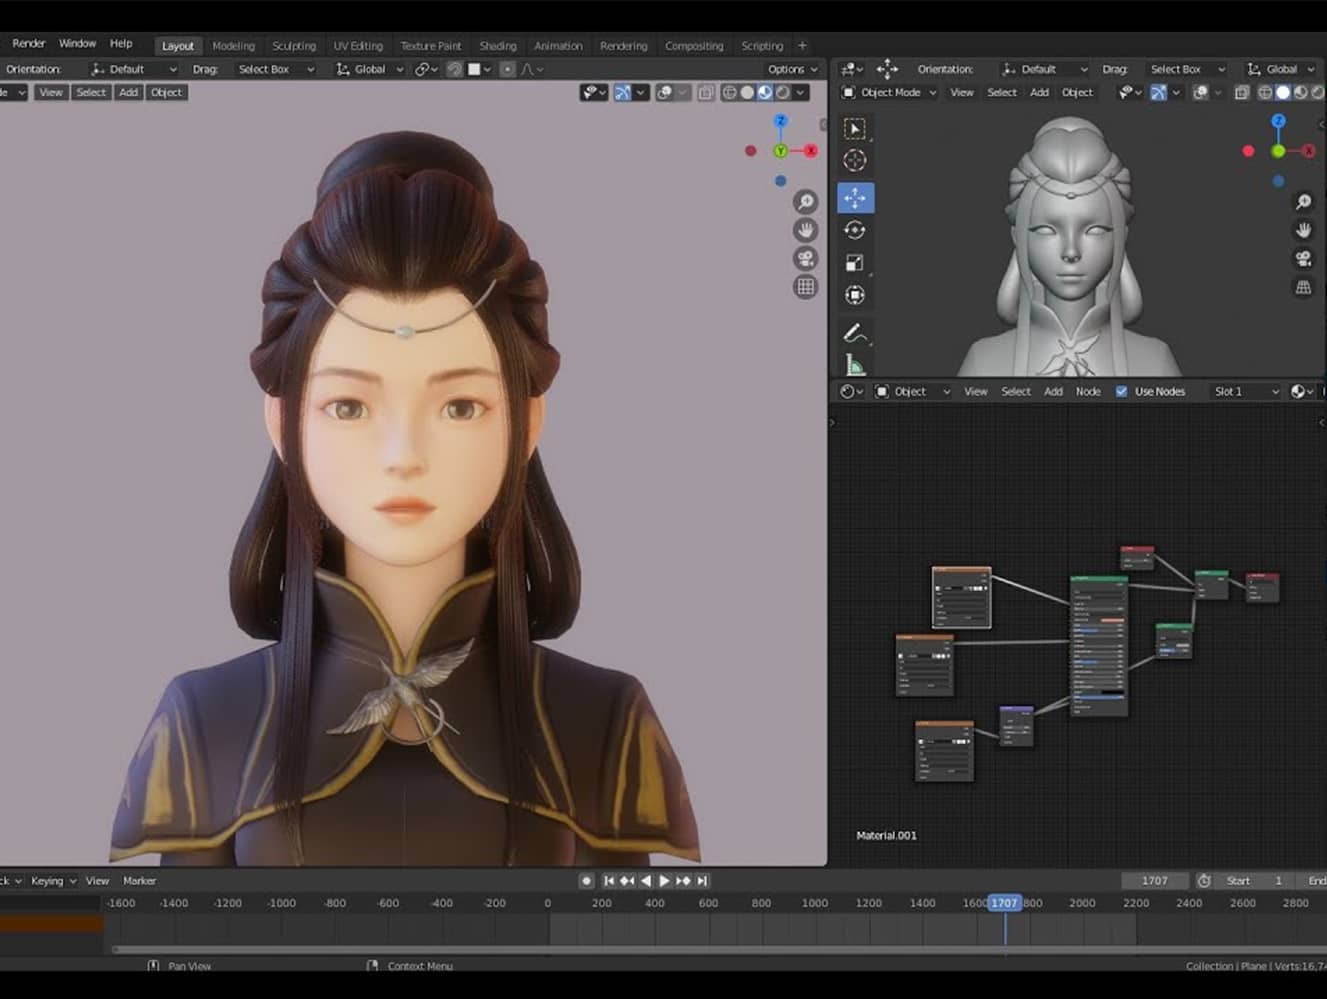 Gutter Forventning Forhåbentlig Beginner's Guide to 3D Character Creation Using Blender | Dezpad Designs